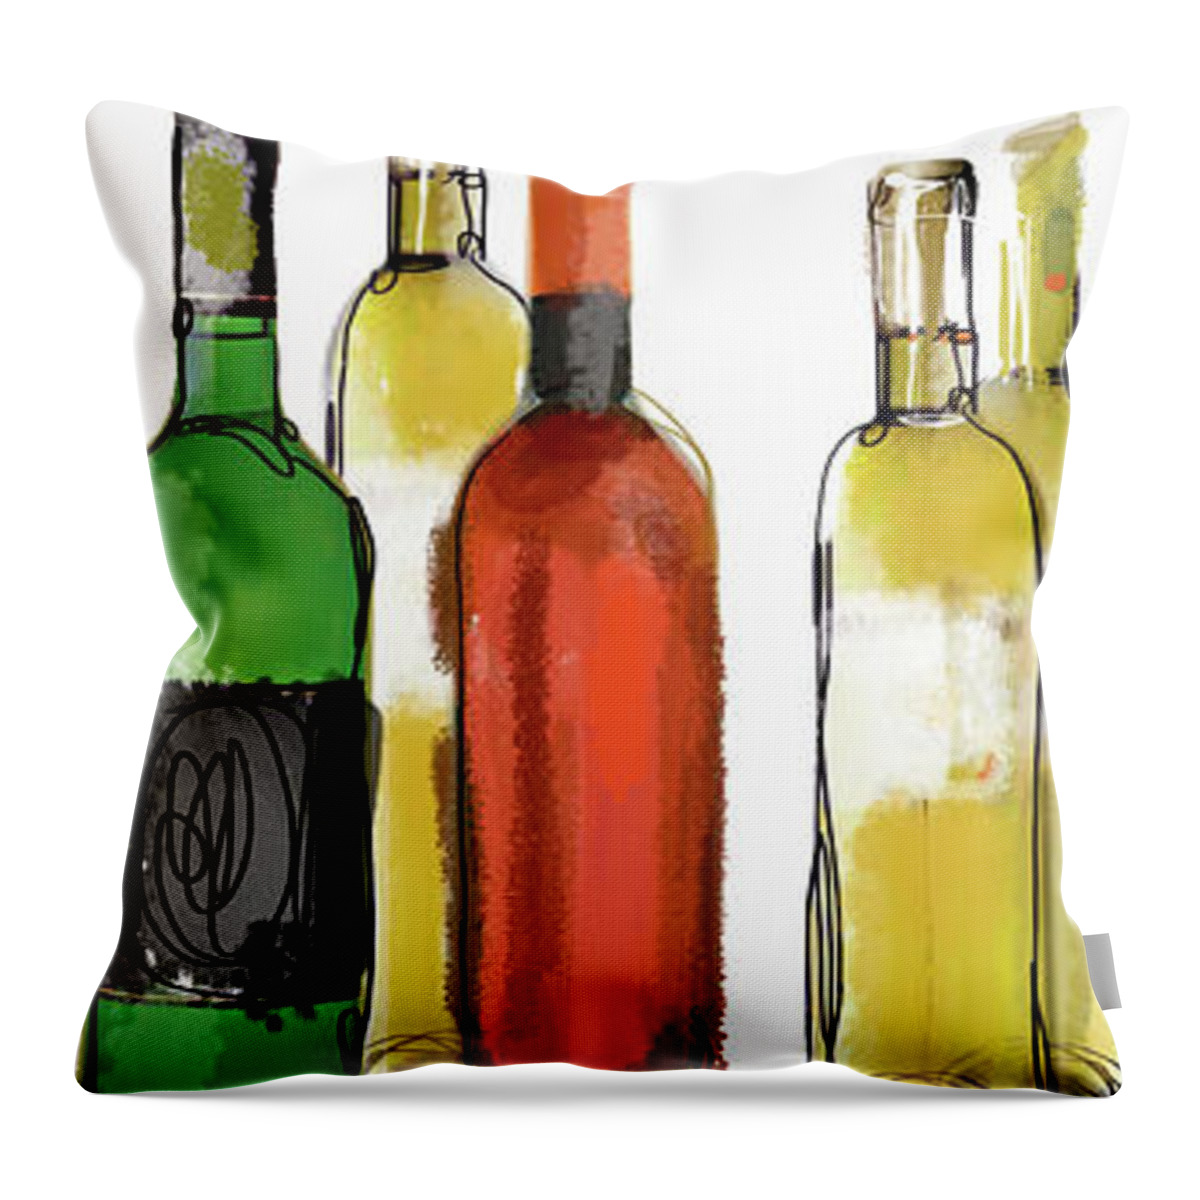 Abundance Throw Pillow featuring the photograph Various Wine Bottles by Ikon Ikon Images